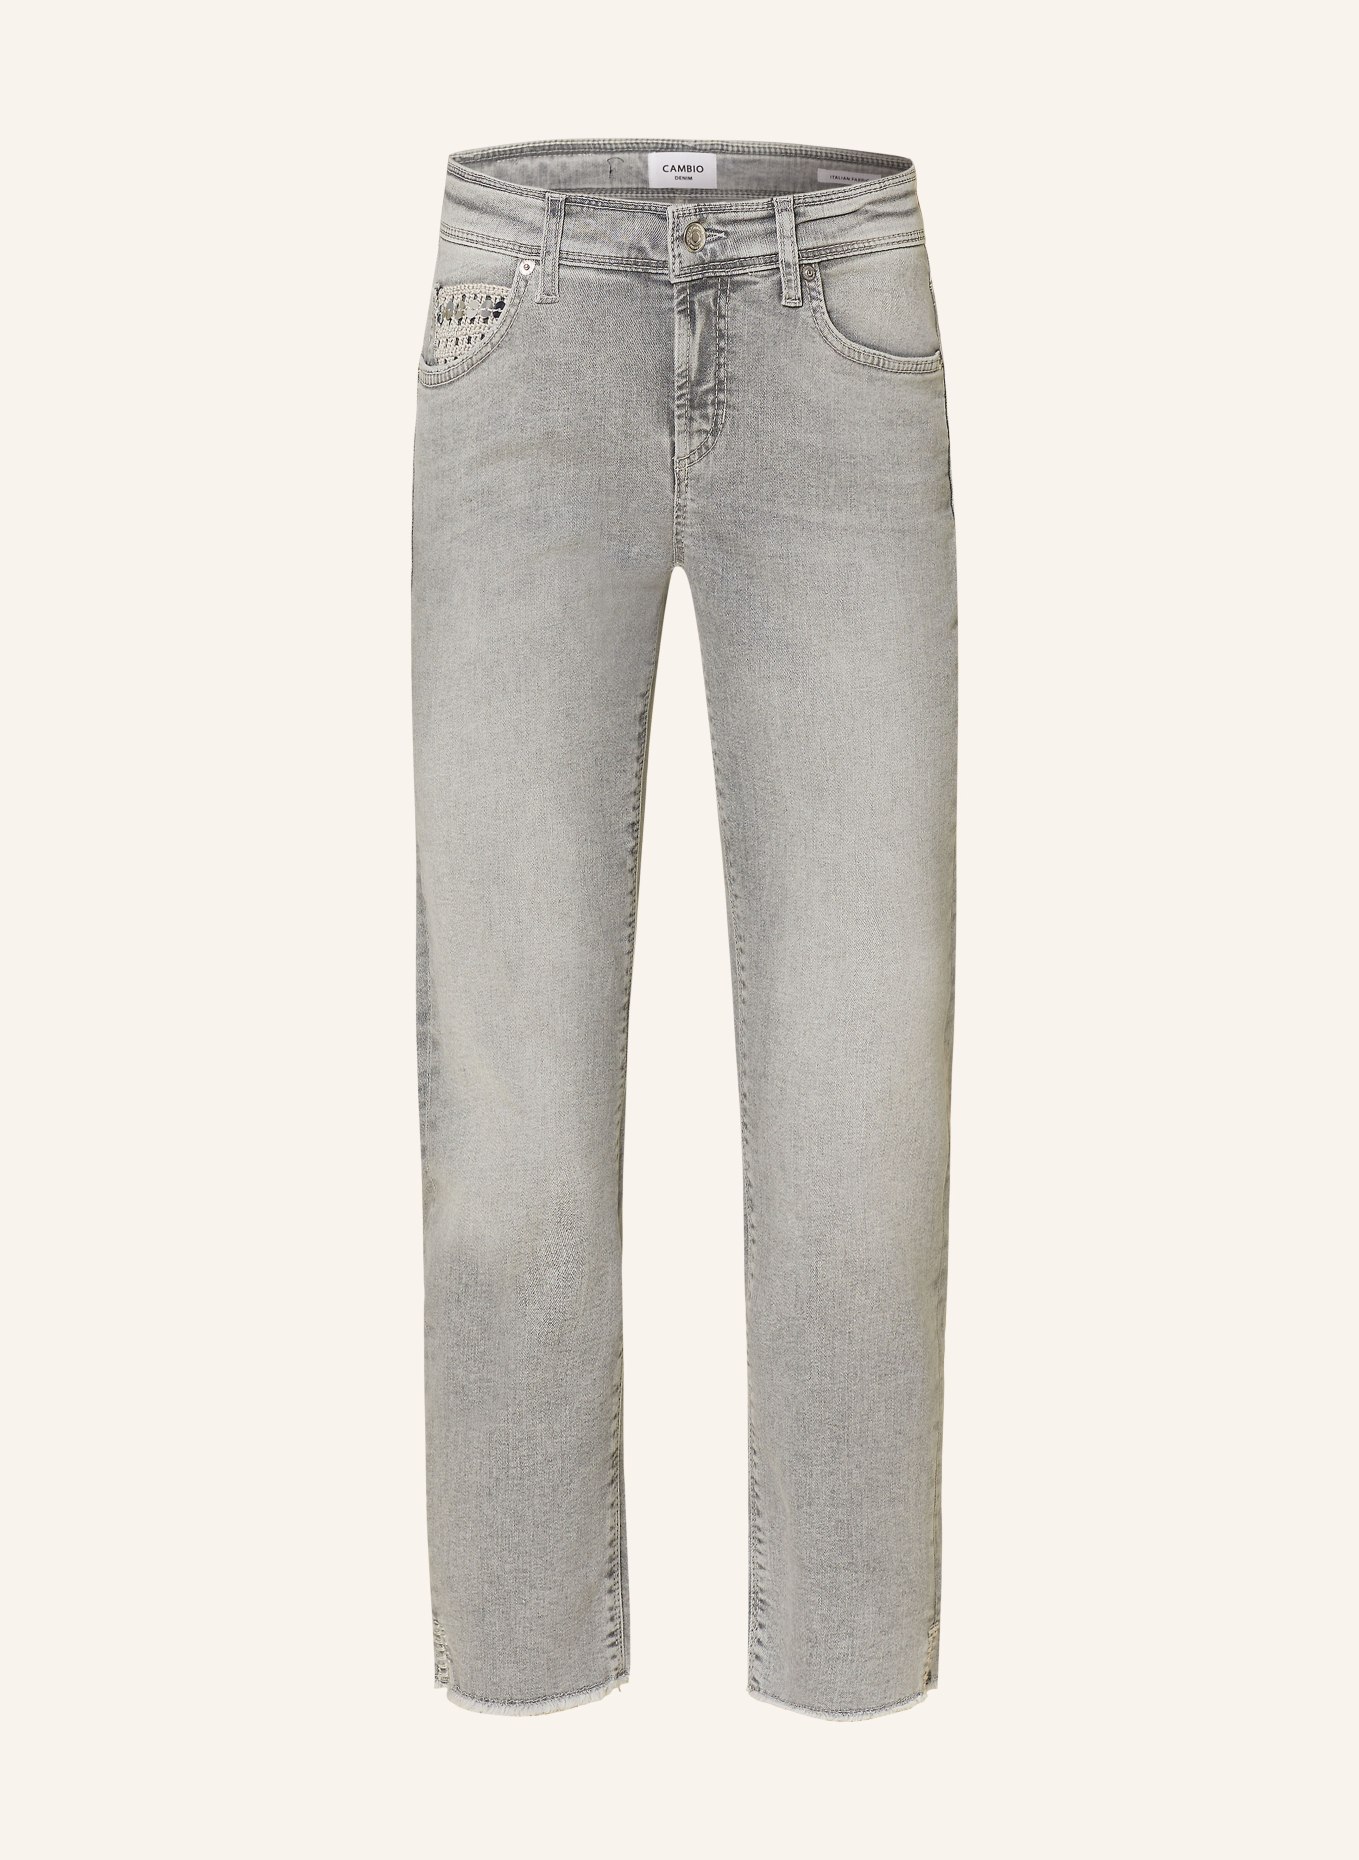 CAMBIO 7/8-Jeans PIPER, Farbe: 5146 light grey fringed hem (Bild 1)